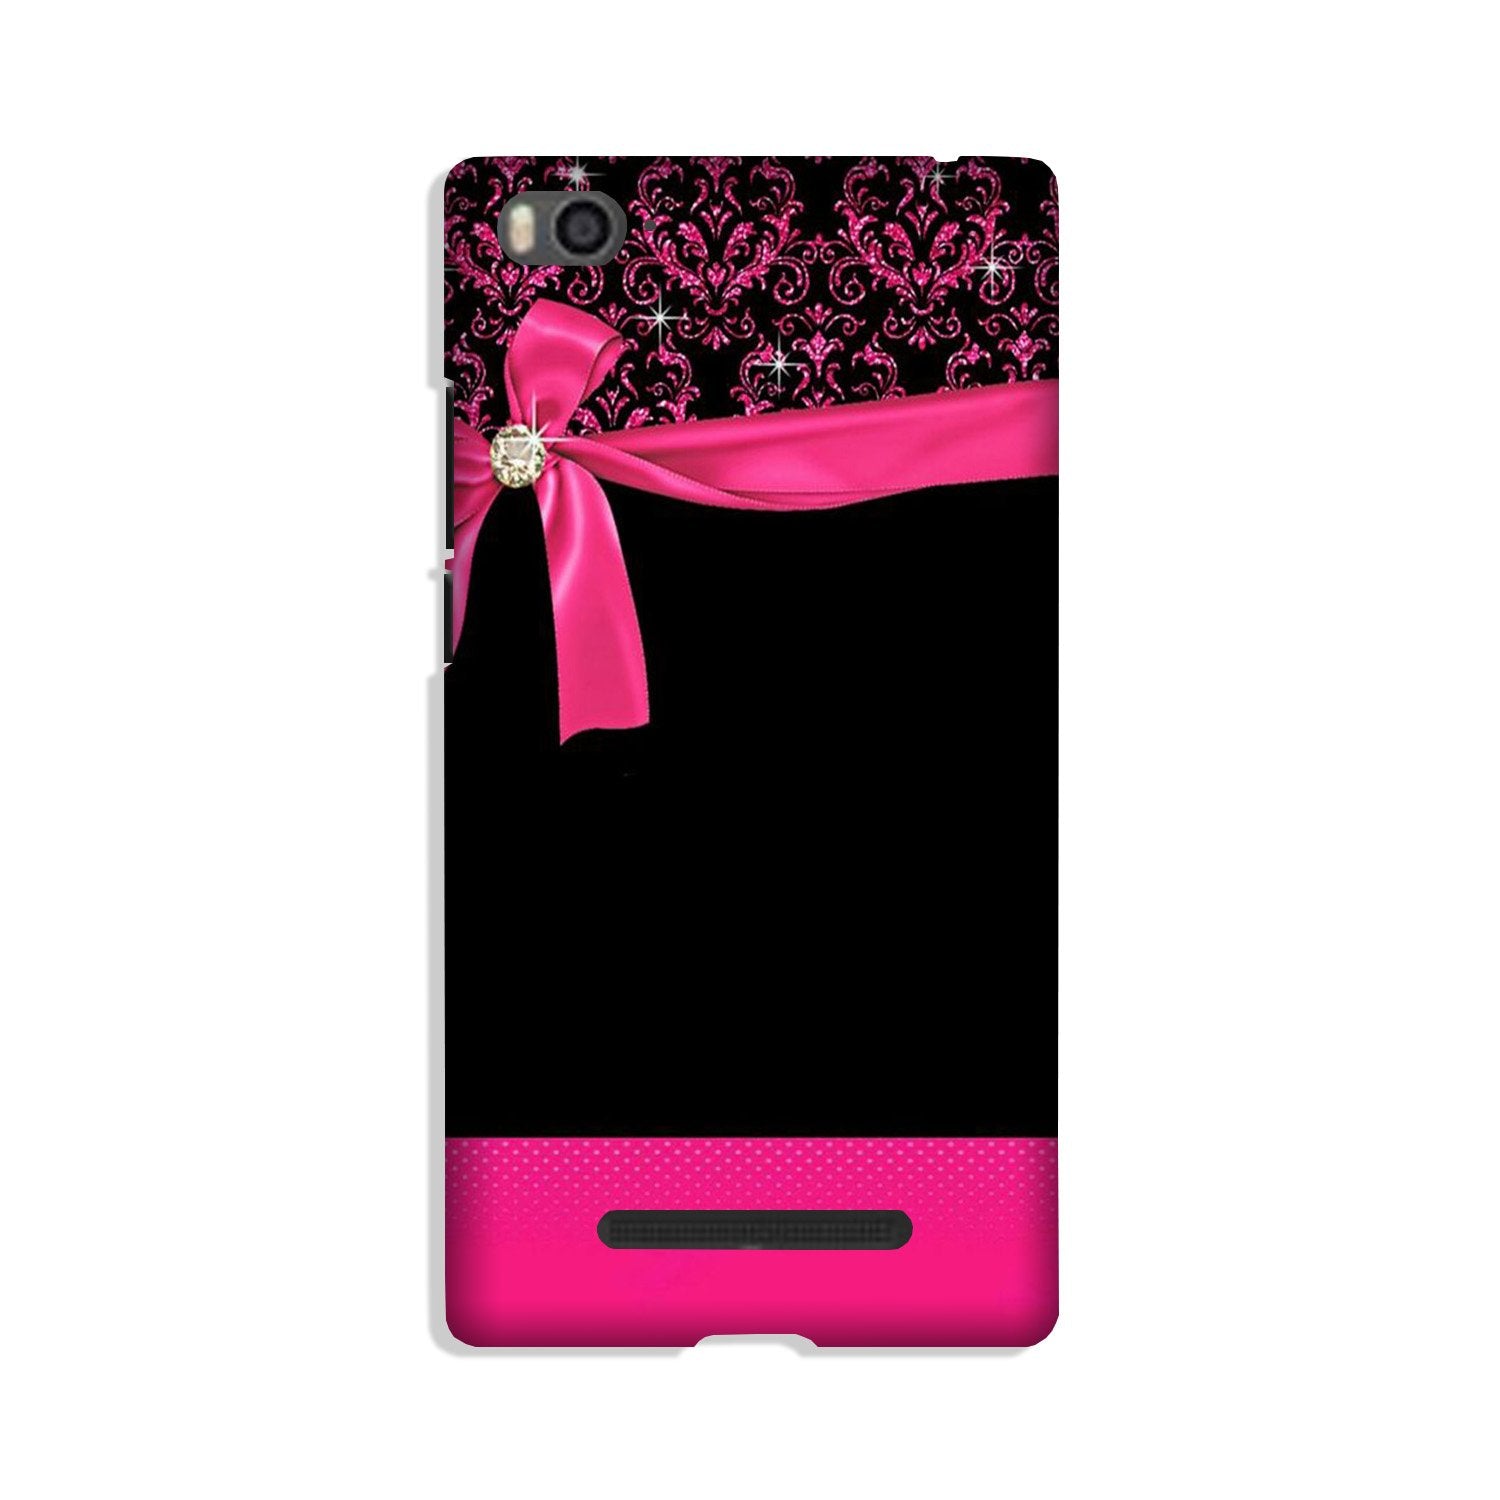 Gift Wrap4 Case for Xiaomi Redmi 5A